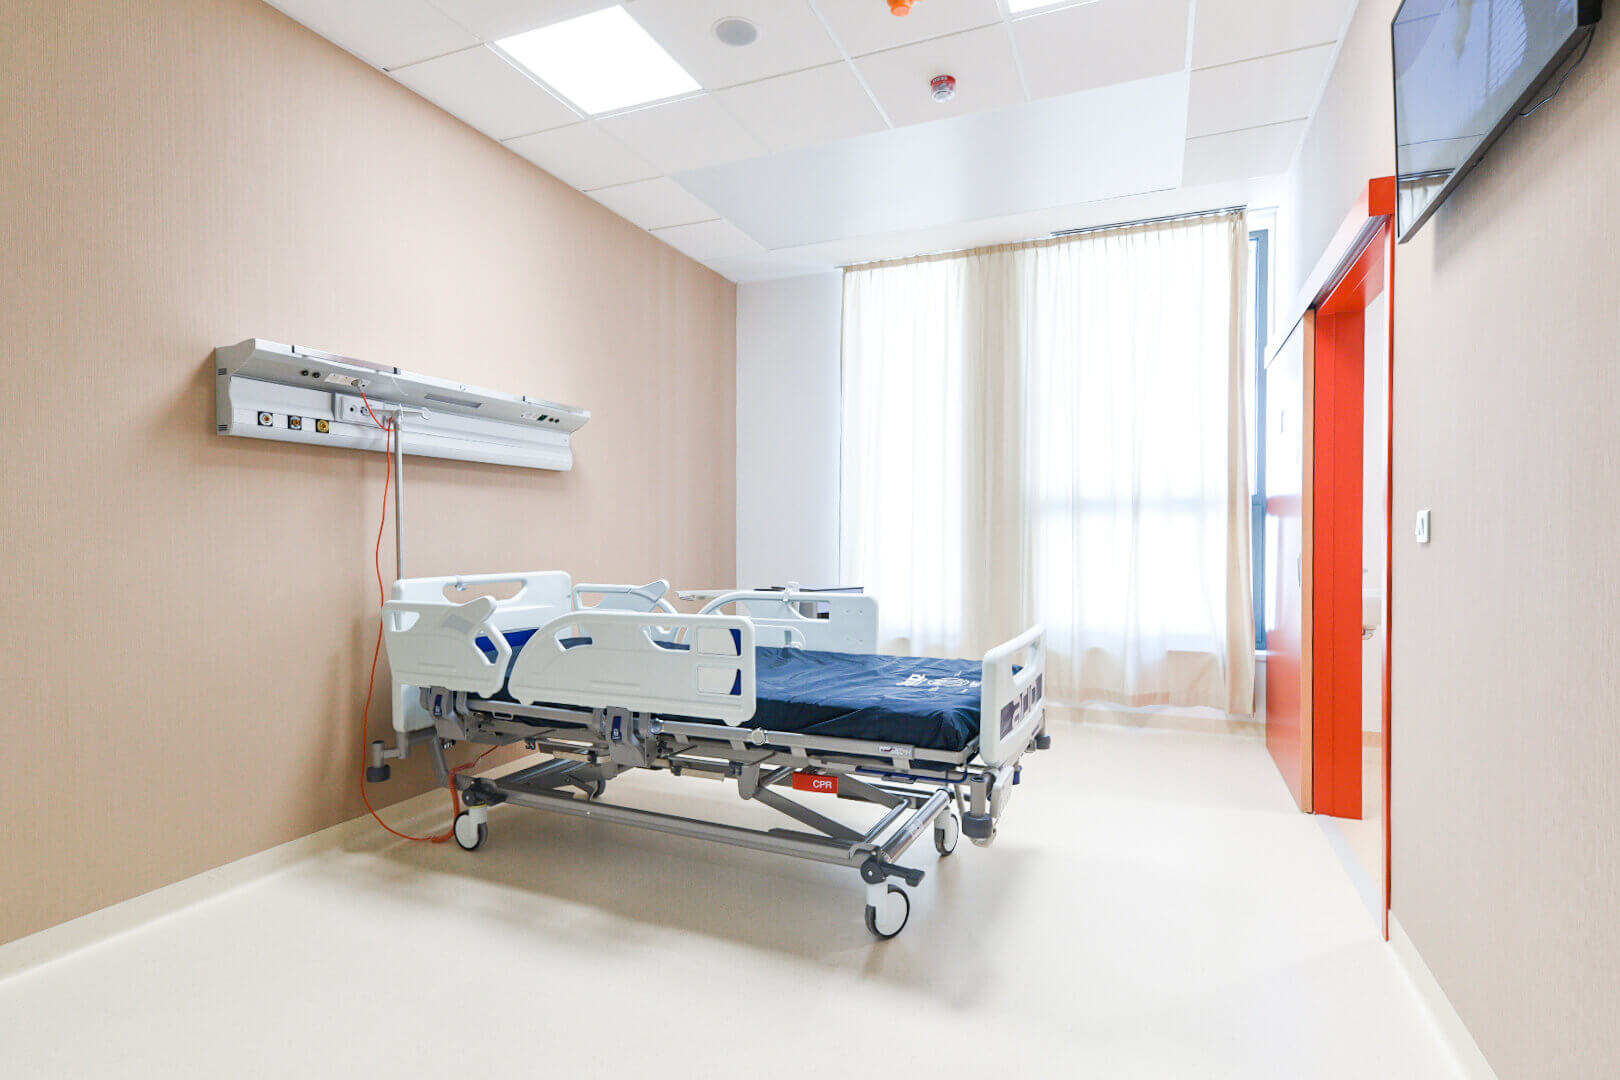 Izba pacienta v nemocnici Bory